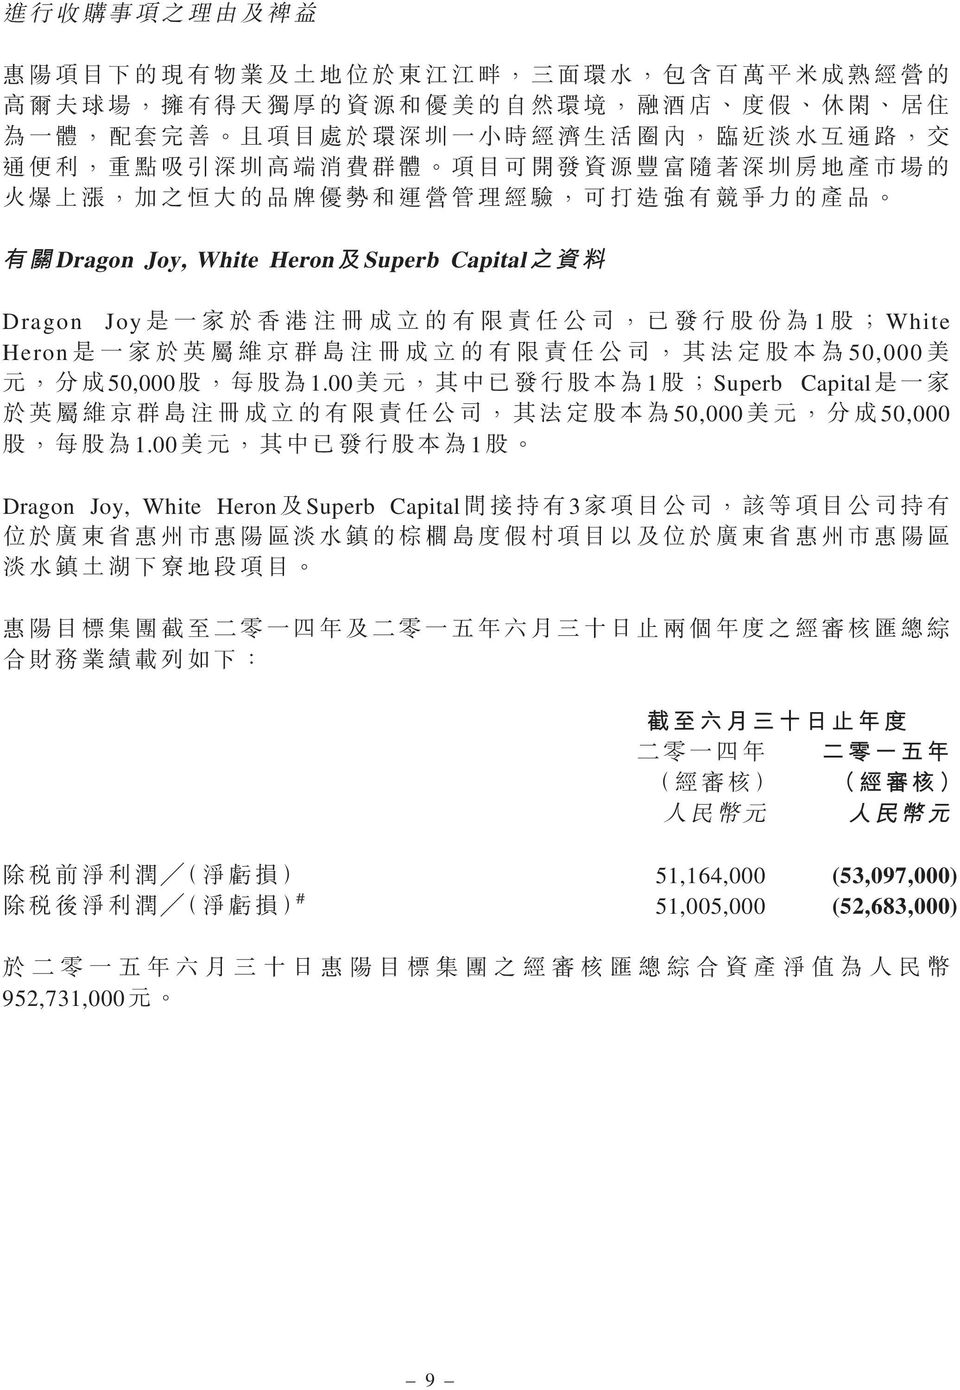 Capital 之 資 料 Dragon Joy 是 一 家 於 香 港 注 冊 成 立 的 有 限 責 任 公 司, 已 發 行 股 份 為 1 股 ; White Heron 是 一 家 於 英 屬 維 京 群 島 注 冊 成 立 的 有 限 責 任 公 司, 其 法 定 股 本 為 50,000 美 元, 分 成 50,000 股, 每 股 為 1.